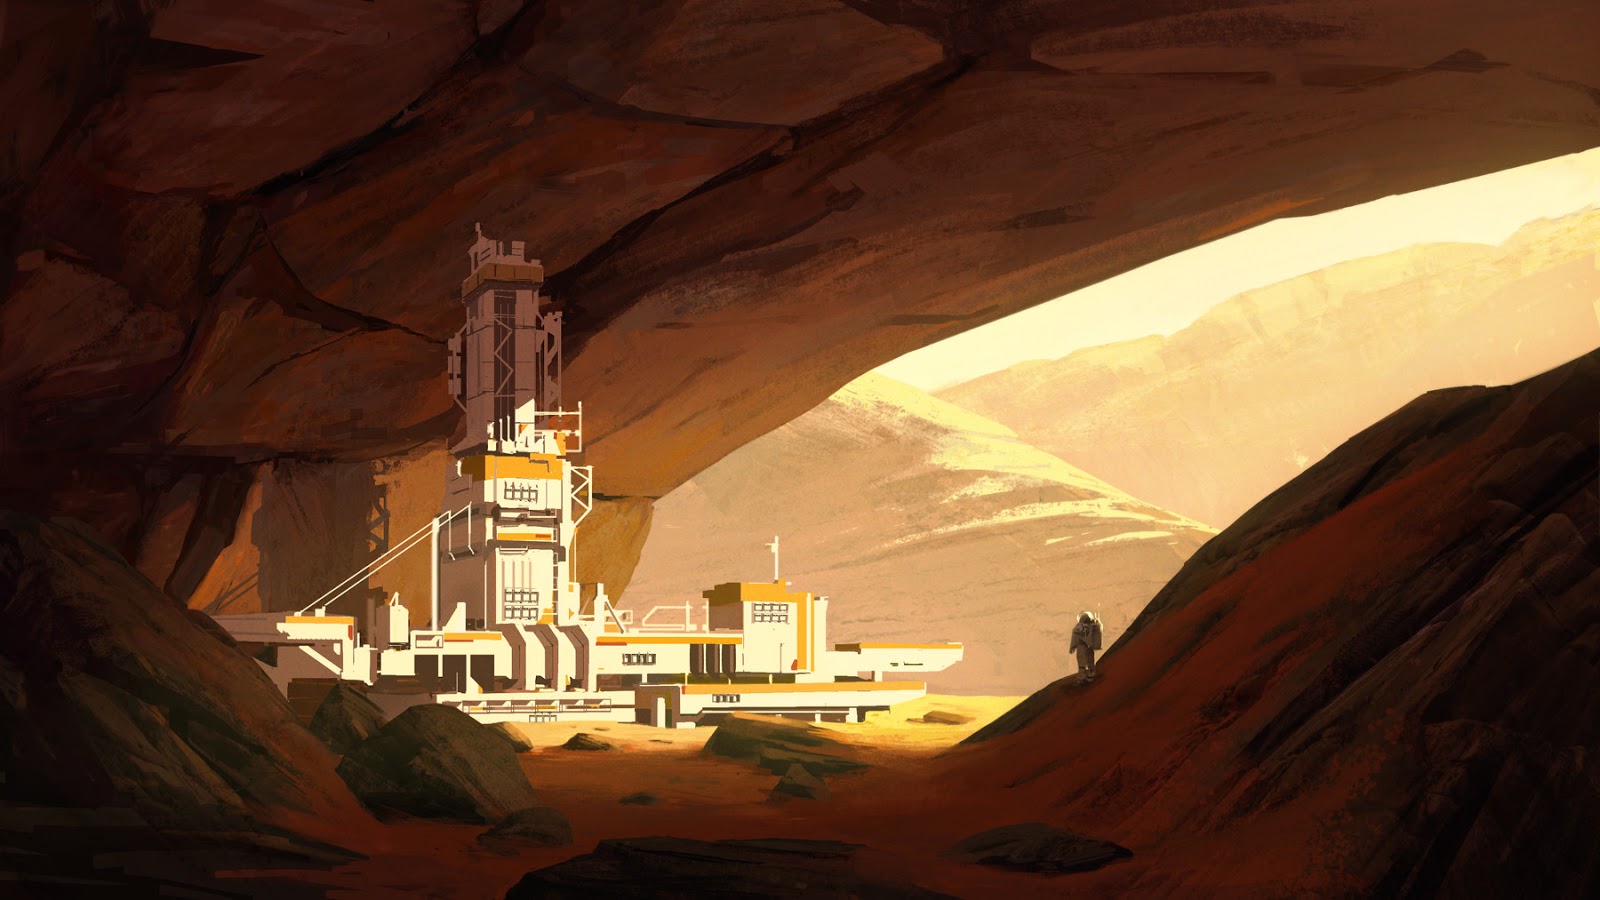 Human base in Martian cave by Natalia Babiy